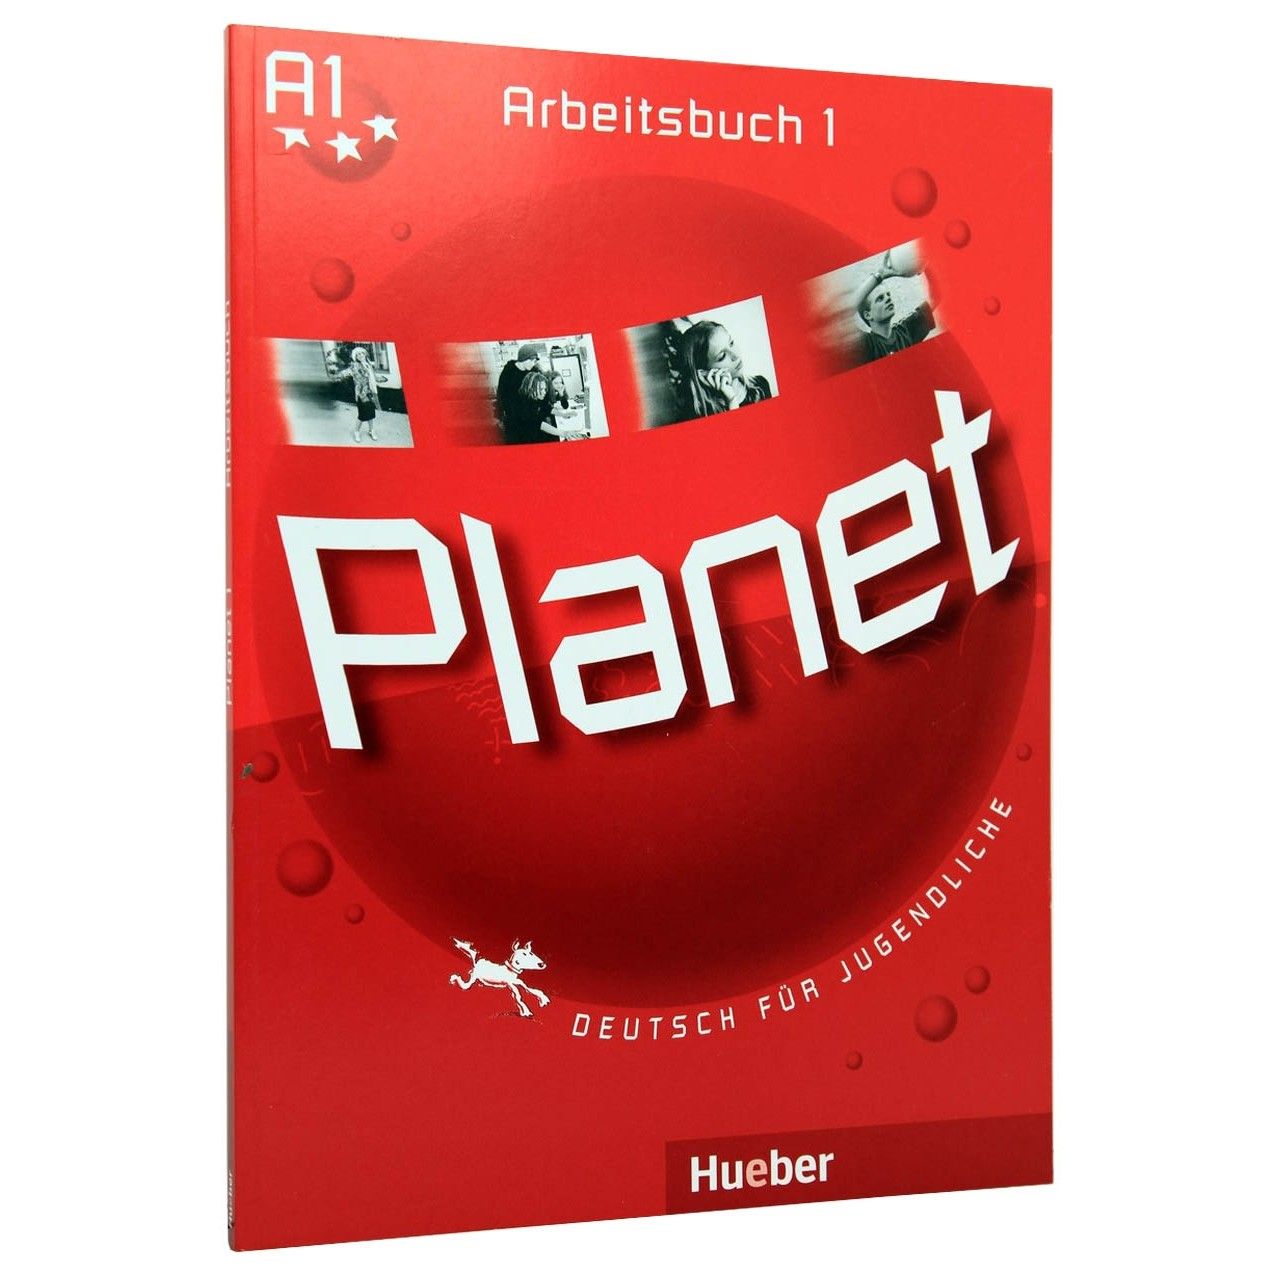 Planet 1 arbeitsbuch download